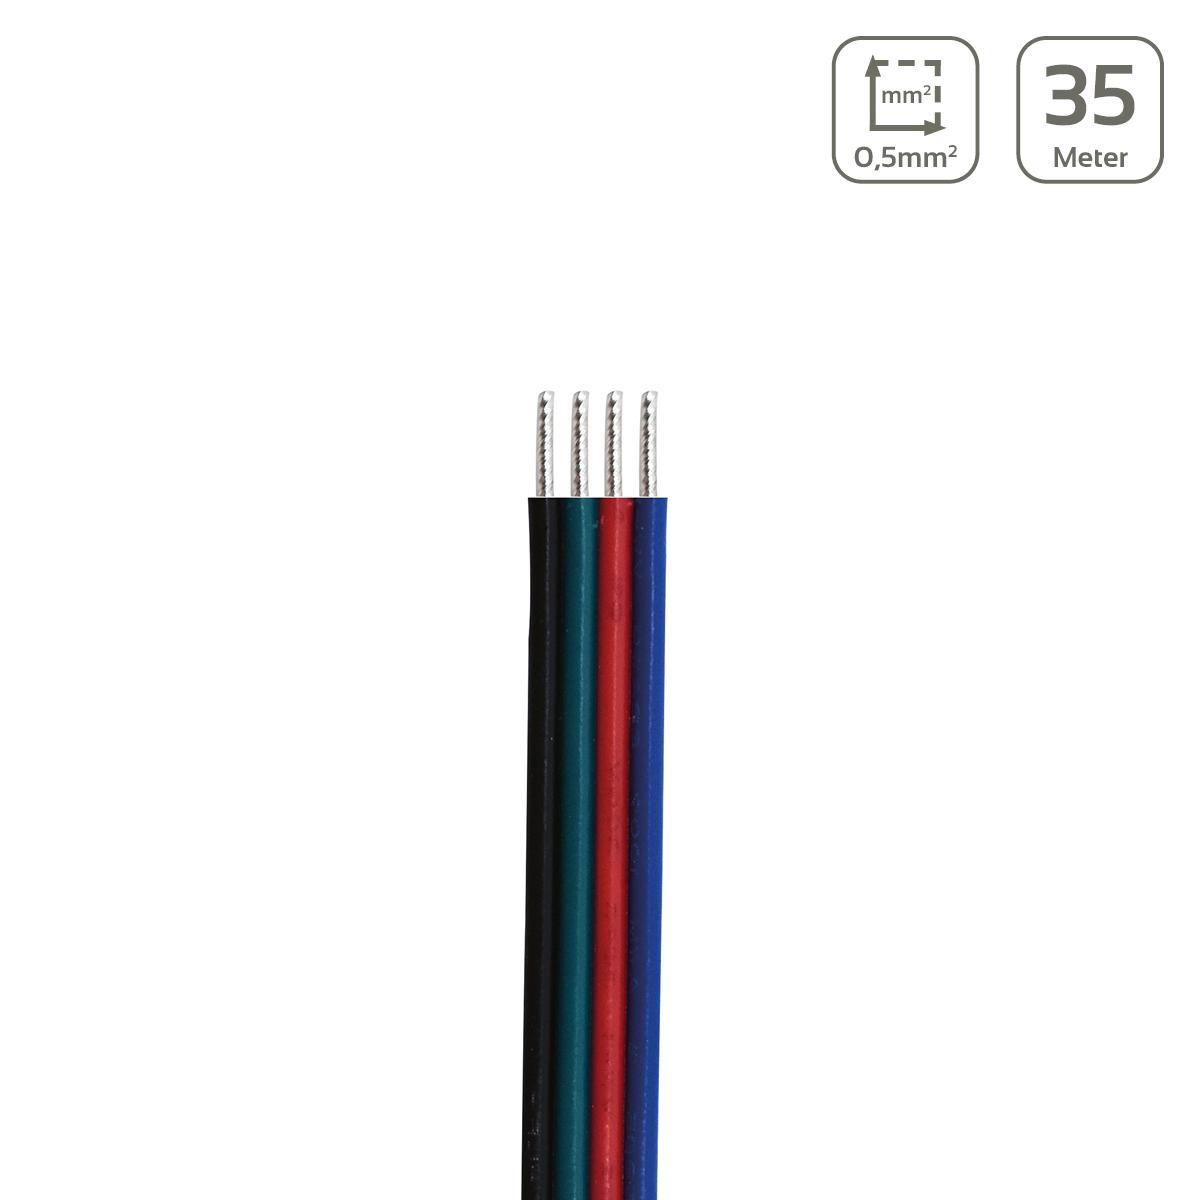 LED Kabel RGB 4-polig - Querschnitt: 4x0,5mm² / AWG20 - Länge: 35m